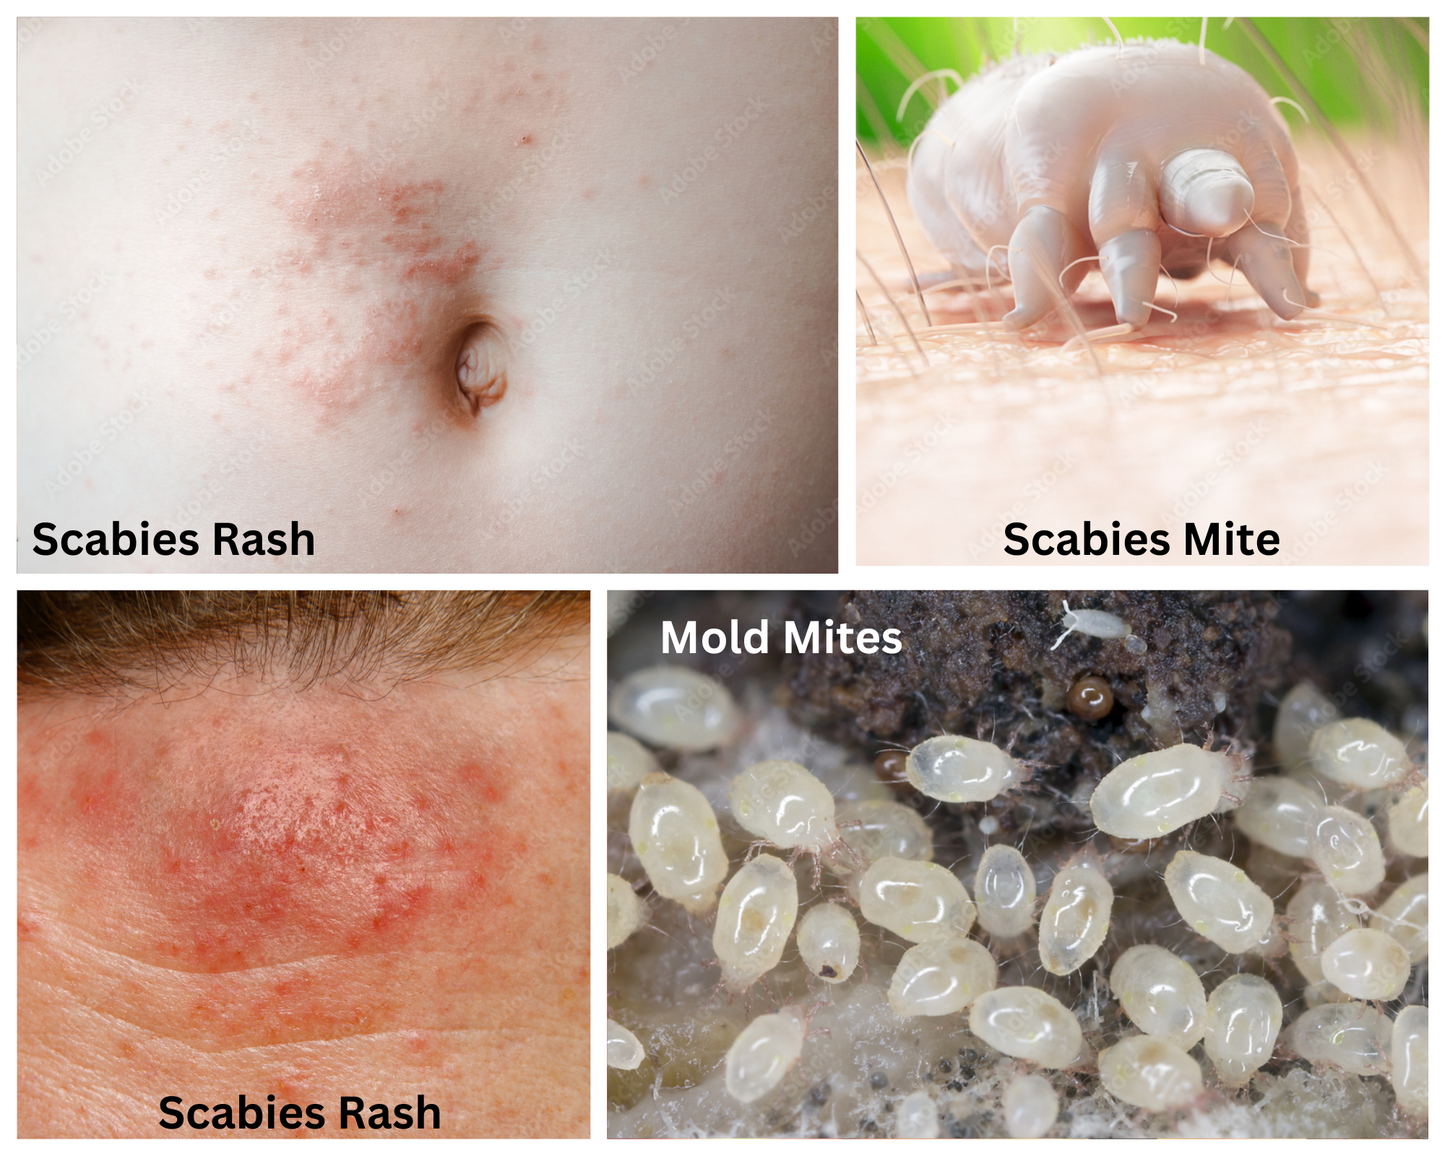 Scabies Treatment Bath Soak | 50 mL